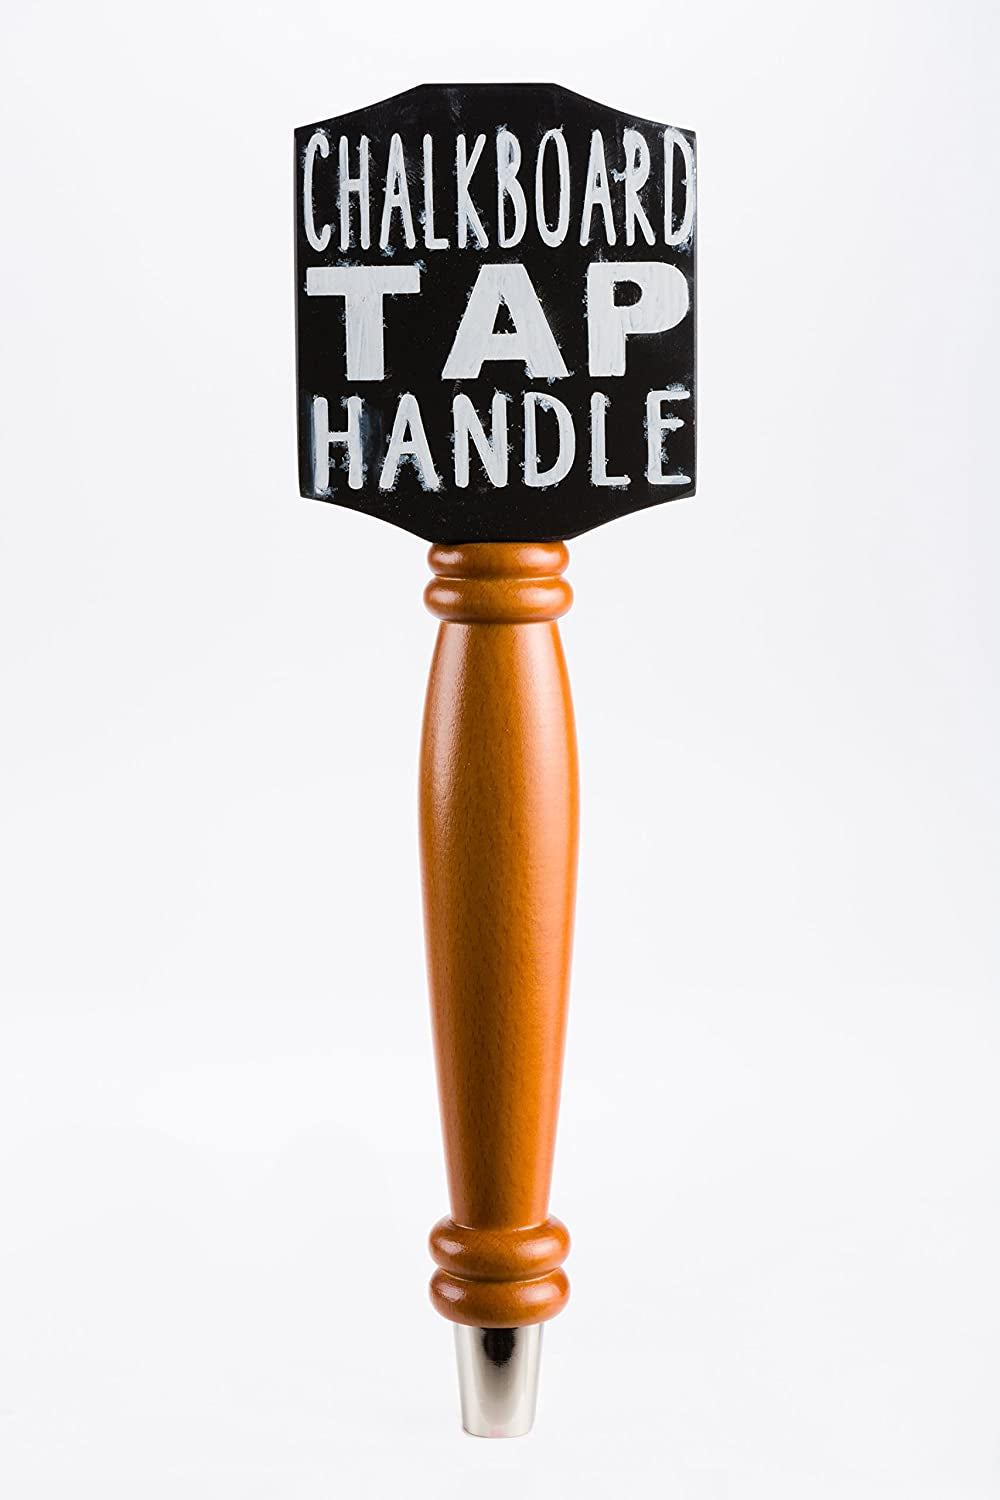 Chalkboard Tap Handle for the Draft Beer Lover'S Kegerator or Bar (Dark)